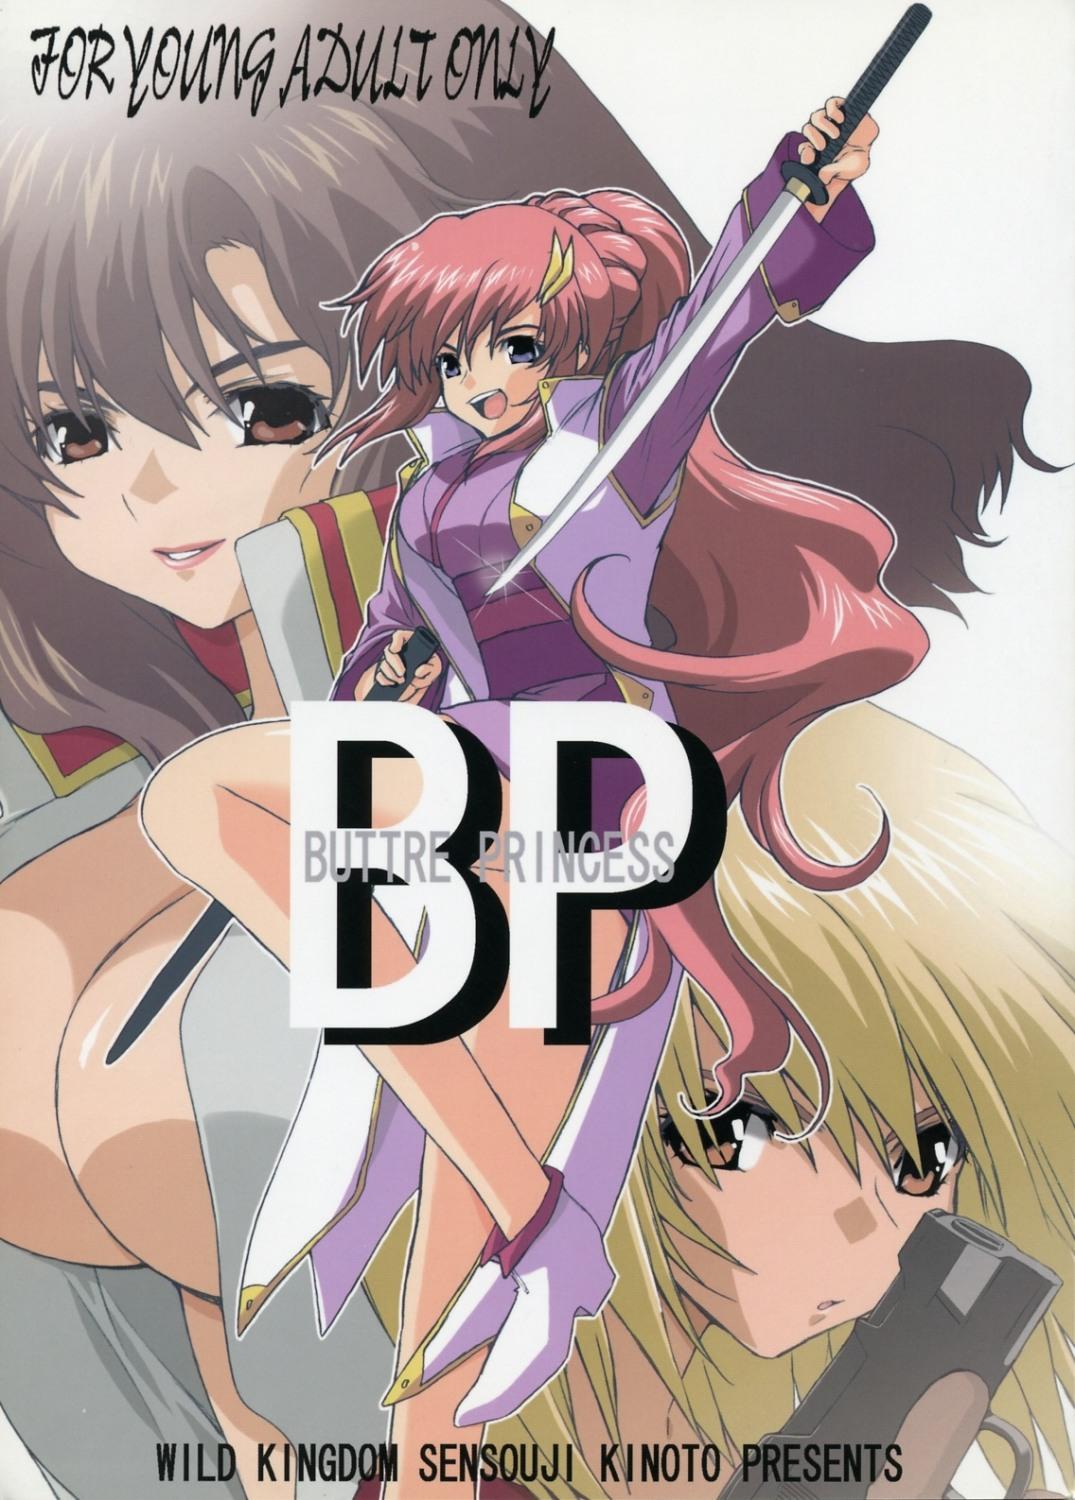 BP - Buttre Princess 0